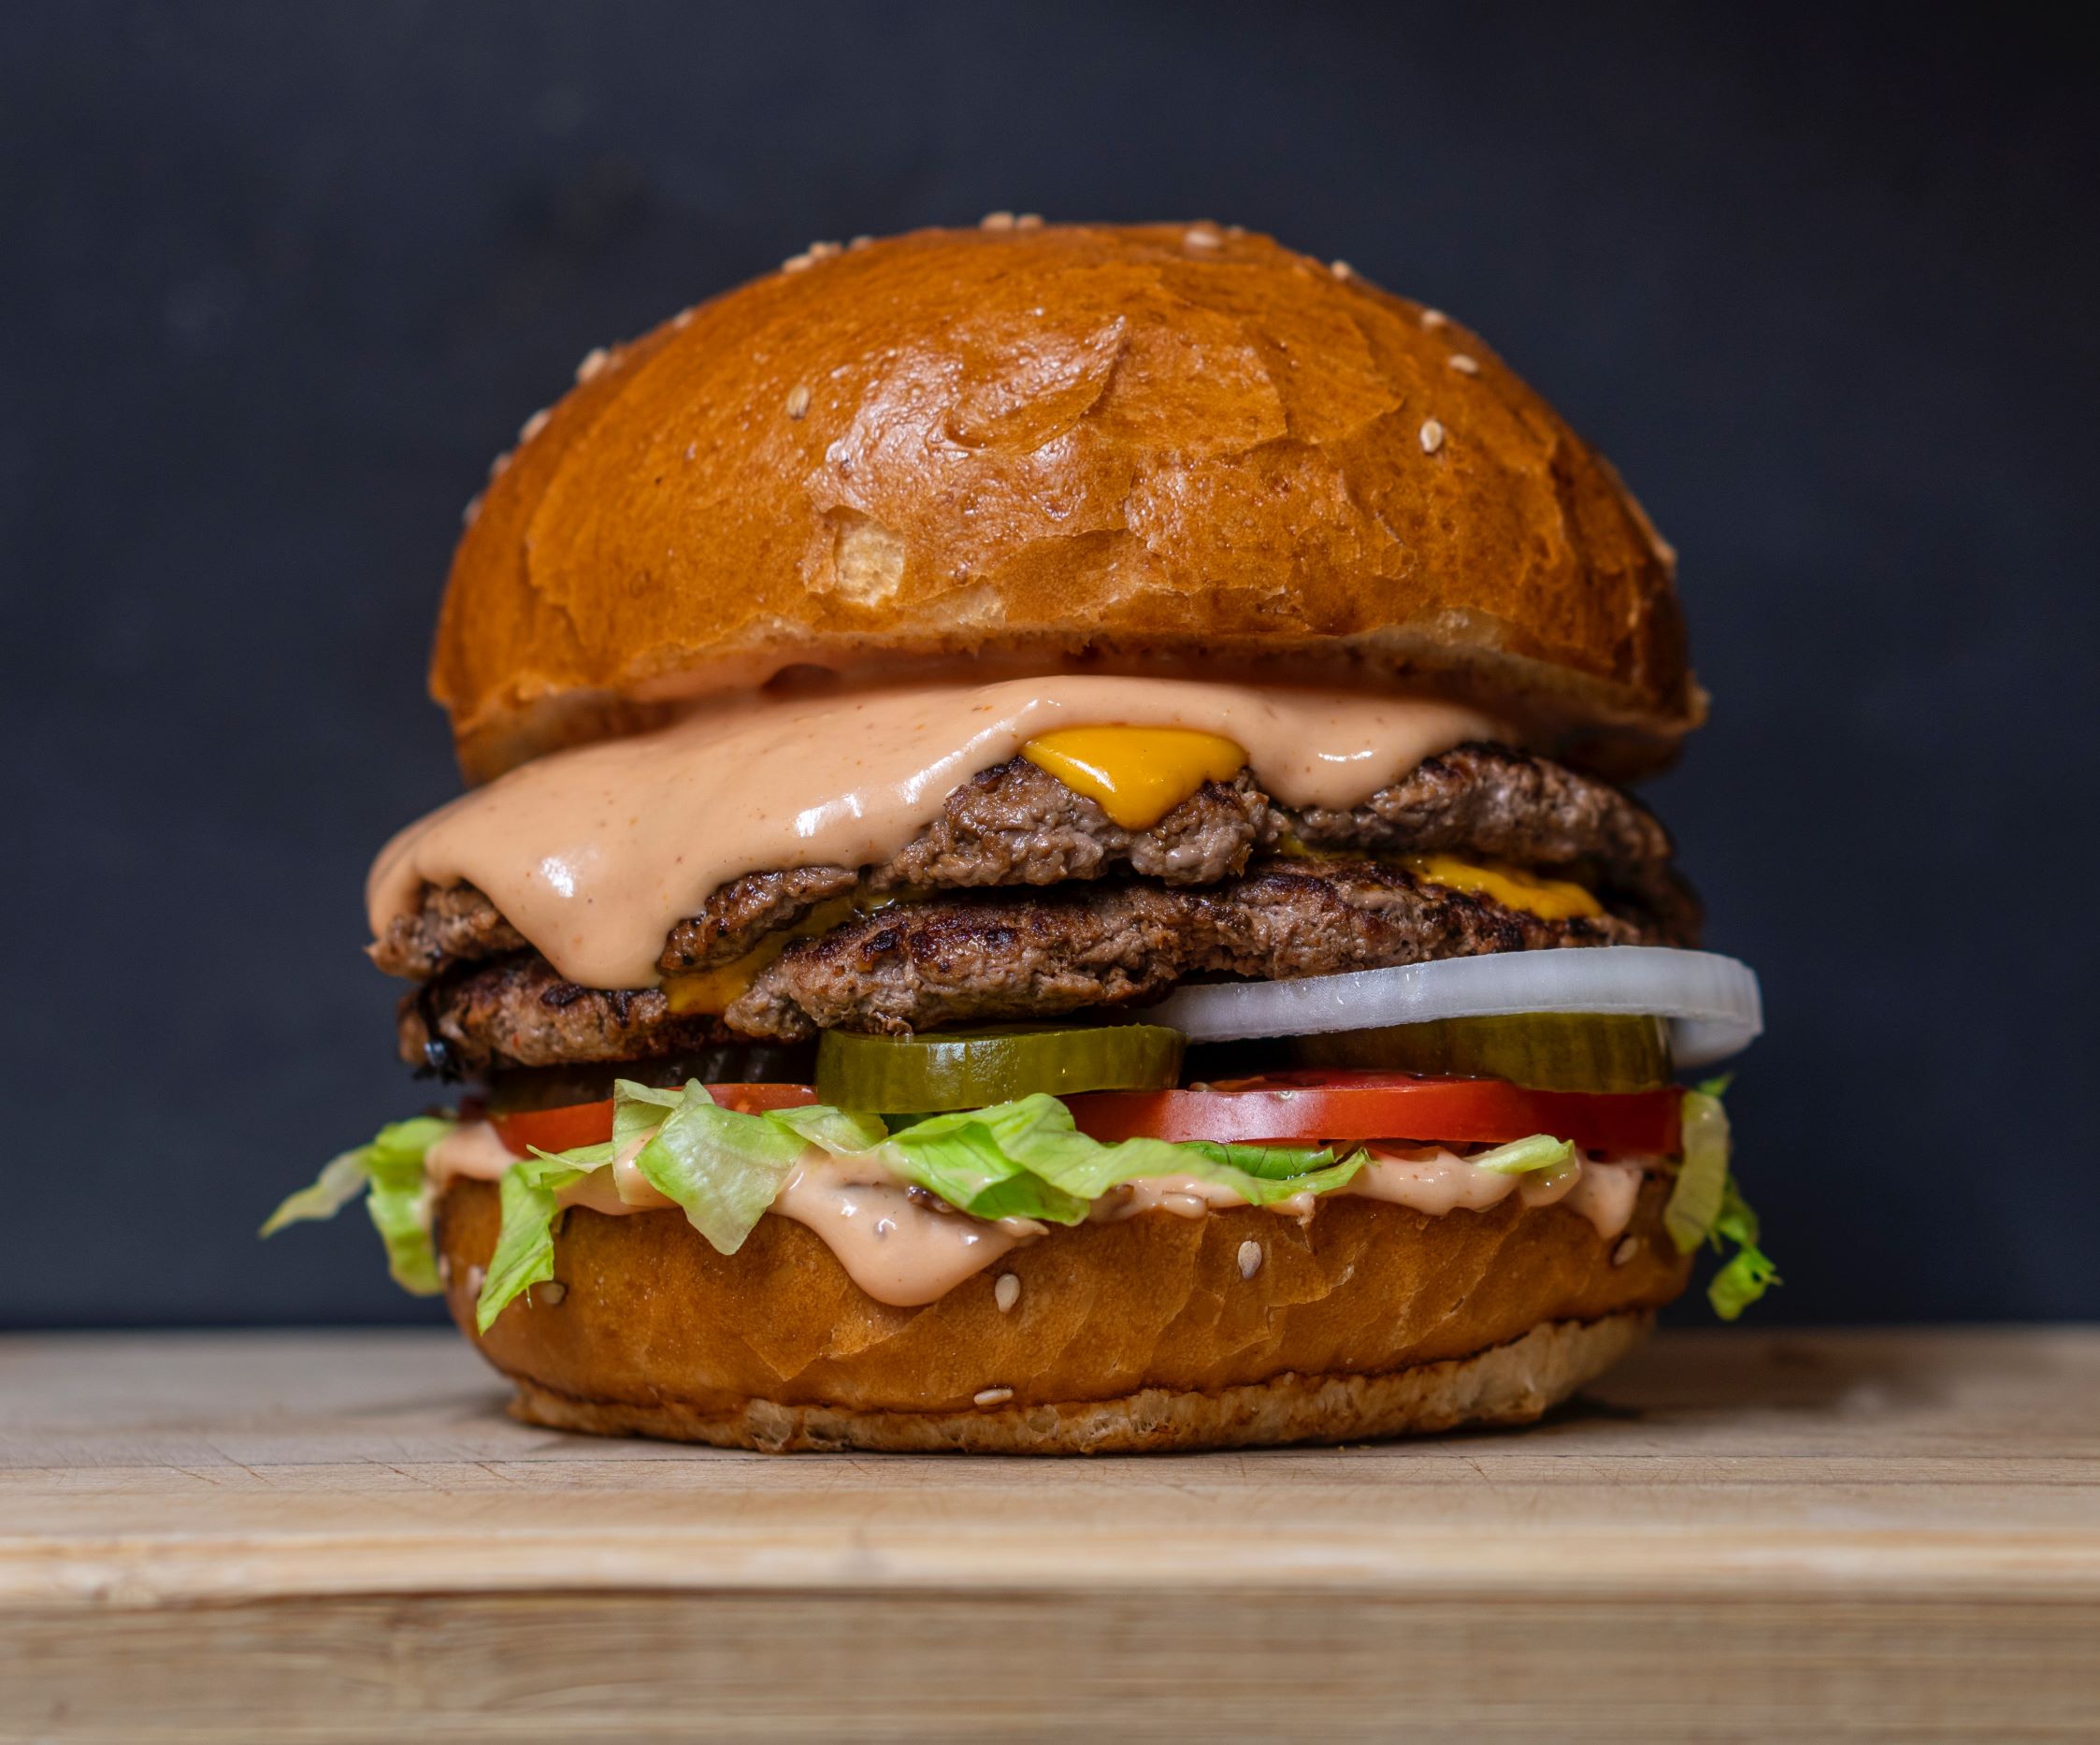 Burger Festival 2021: Το πρόγραμμα ανακοινώθηκε και έχει πολλά events (και ακόμα περισσότερα burgers)